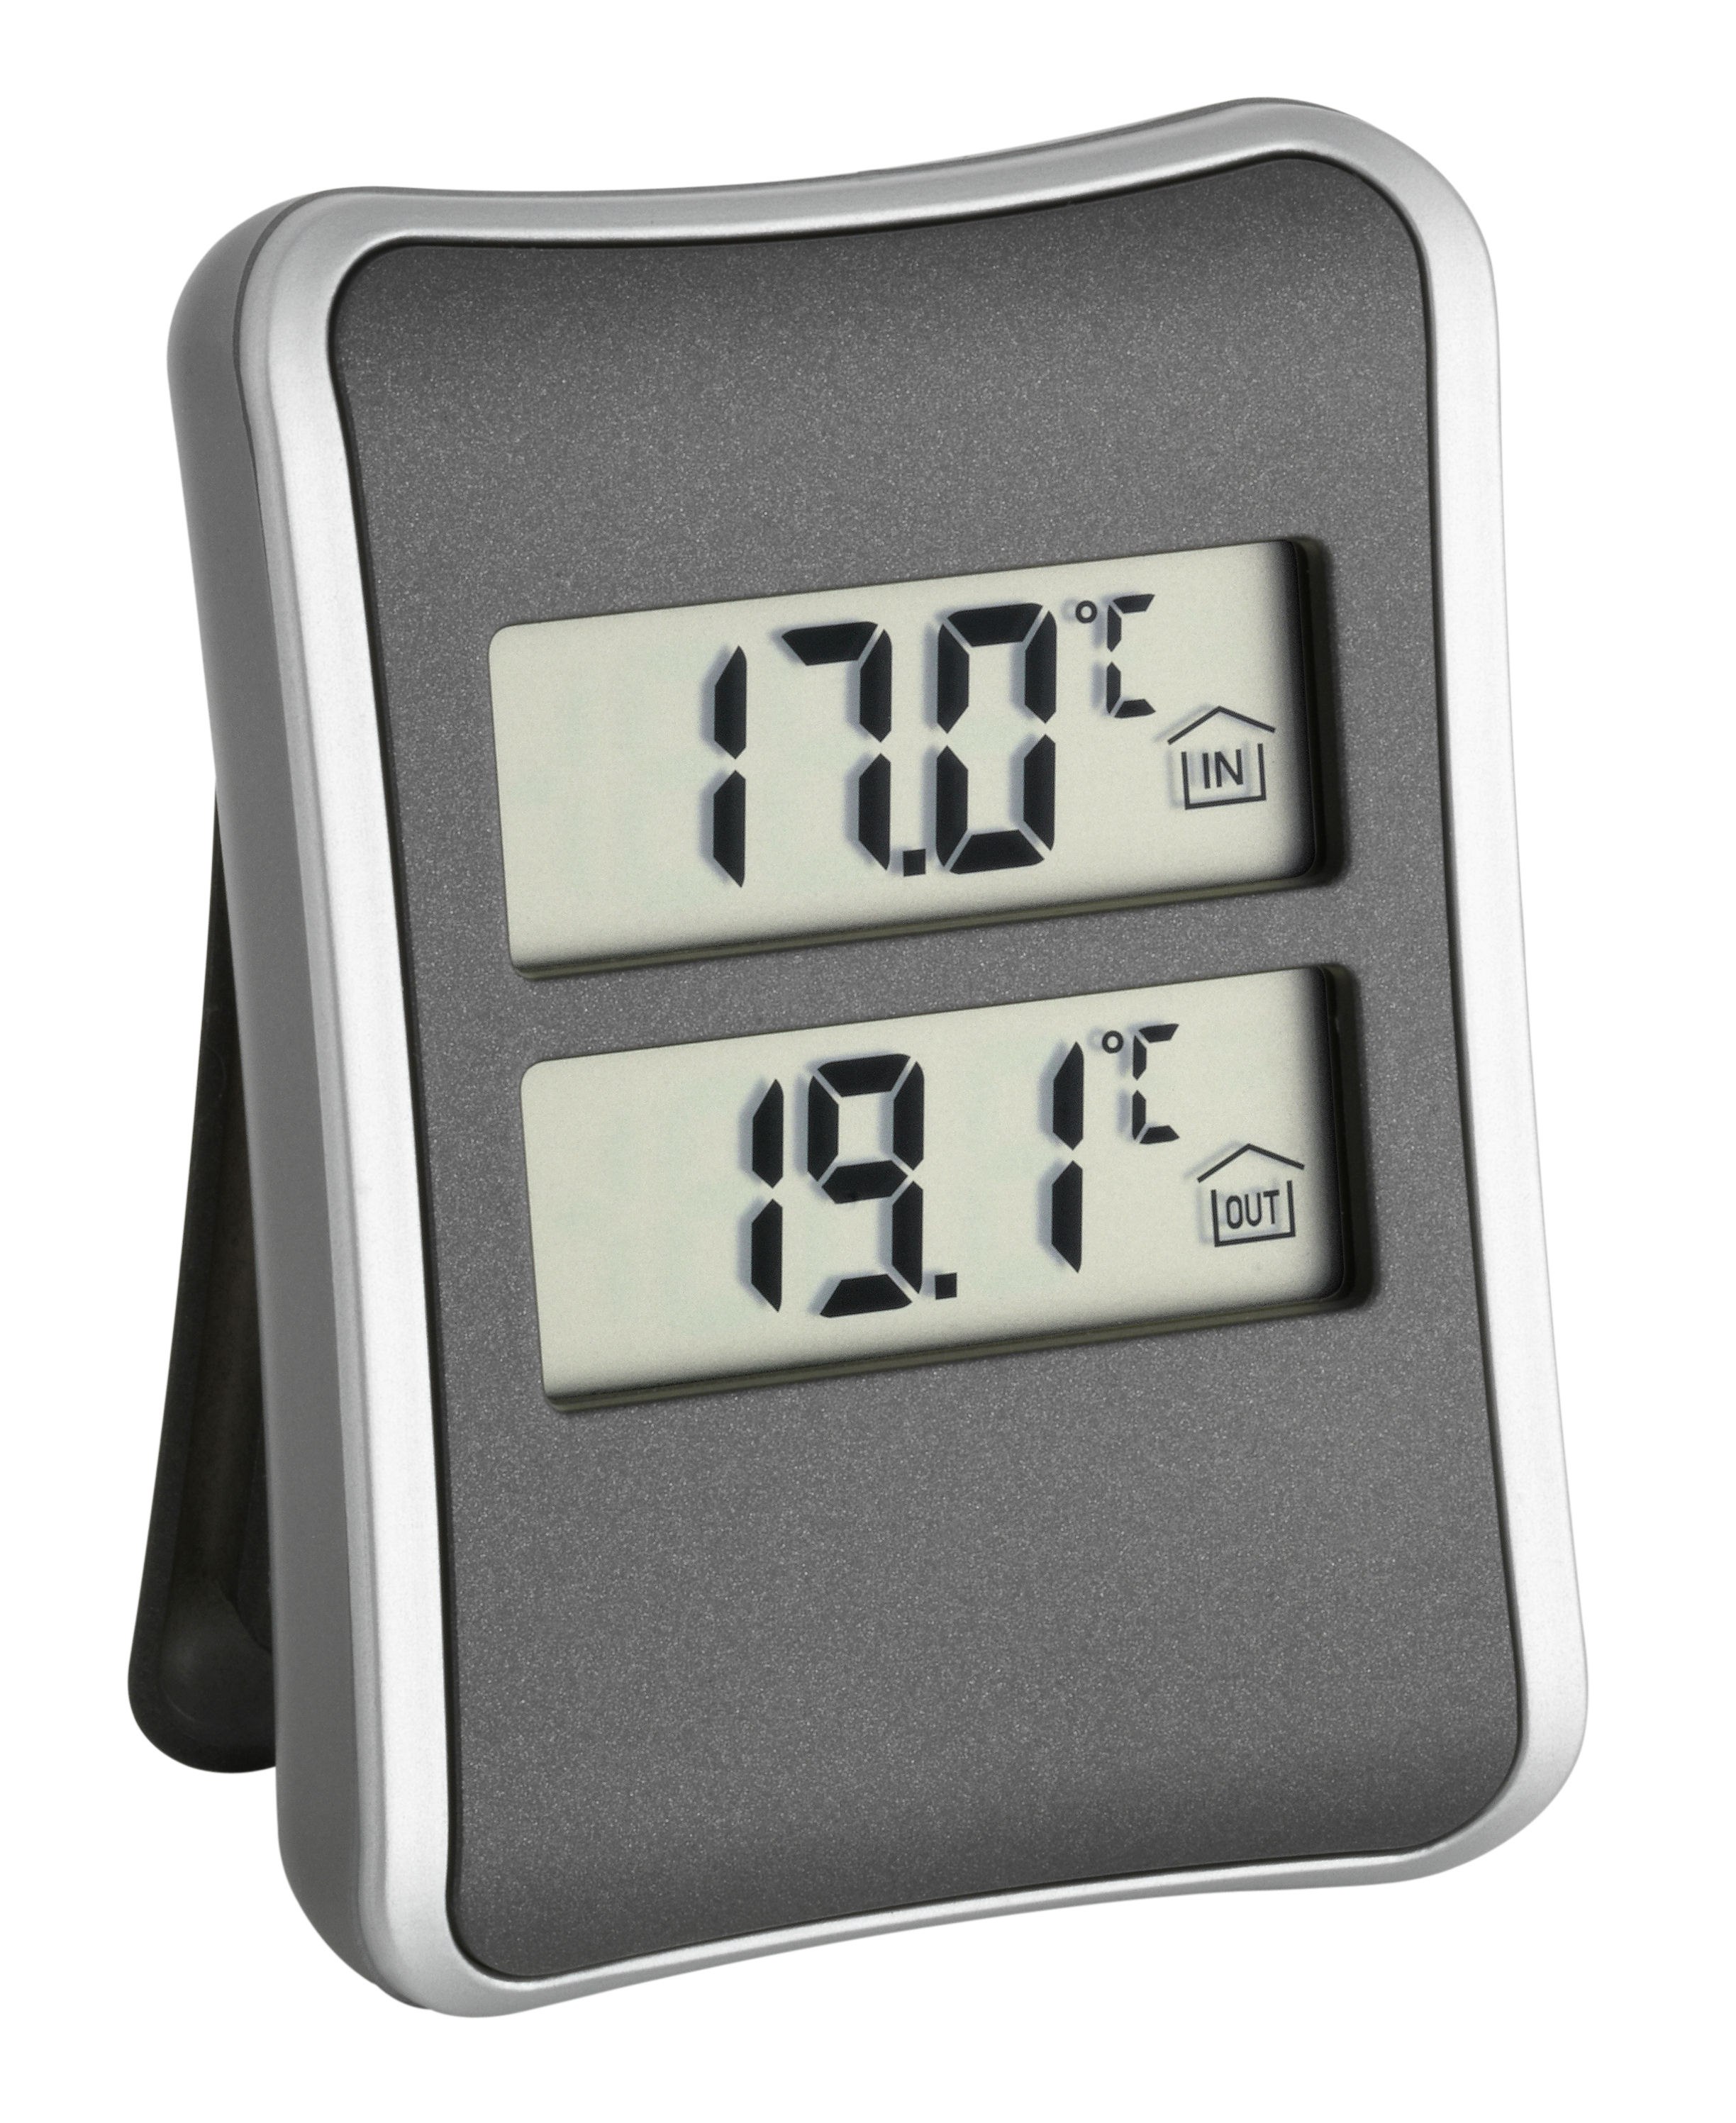 TFA Digitales Innen-Außen-Thermometer 30.1044